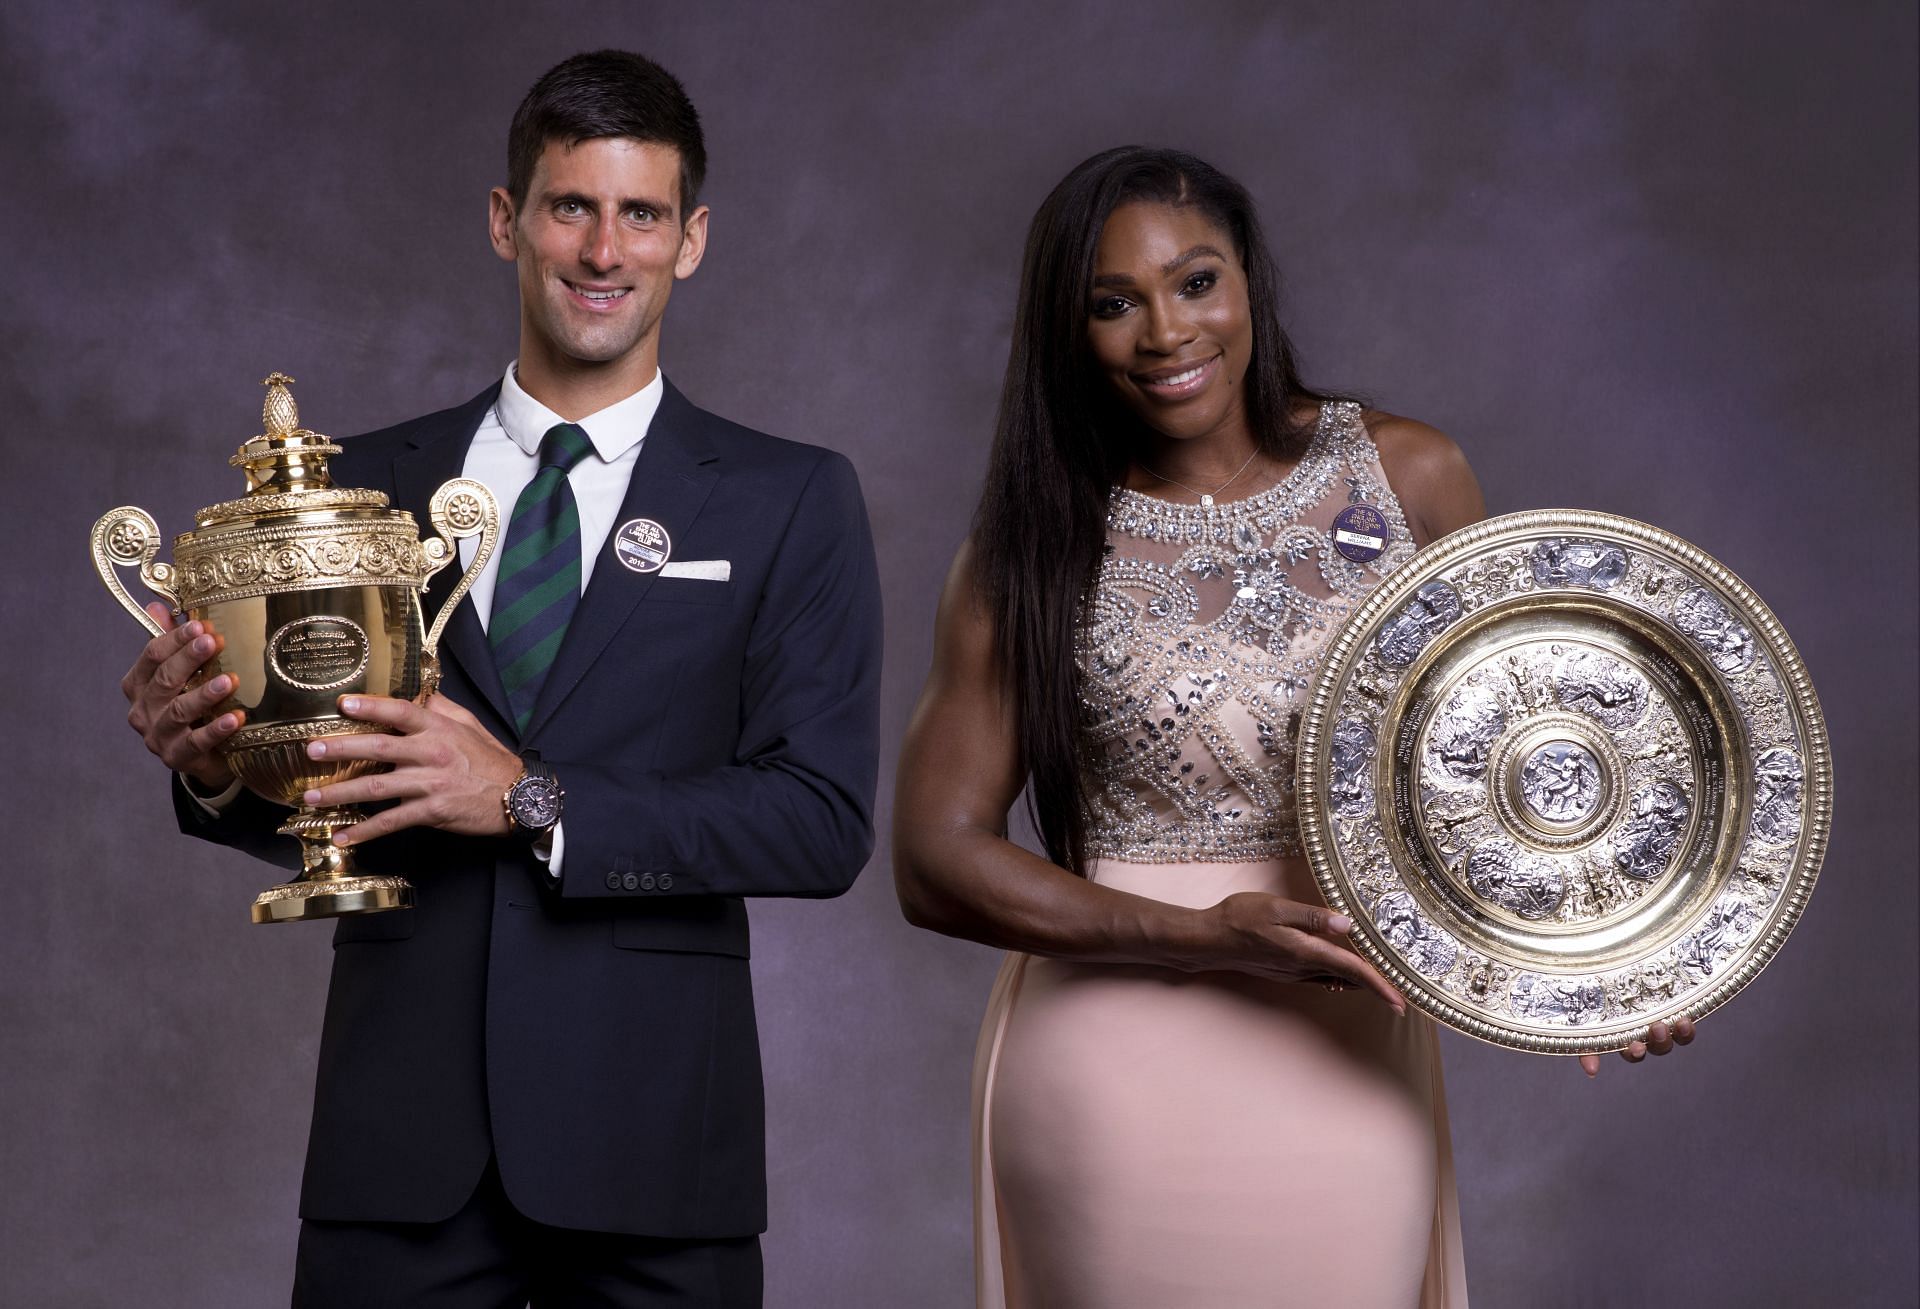 Novak Djokovic and Serena Williams won the singles titles at the 2015 Wimbledon Championships